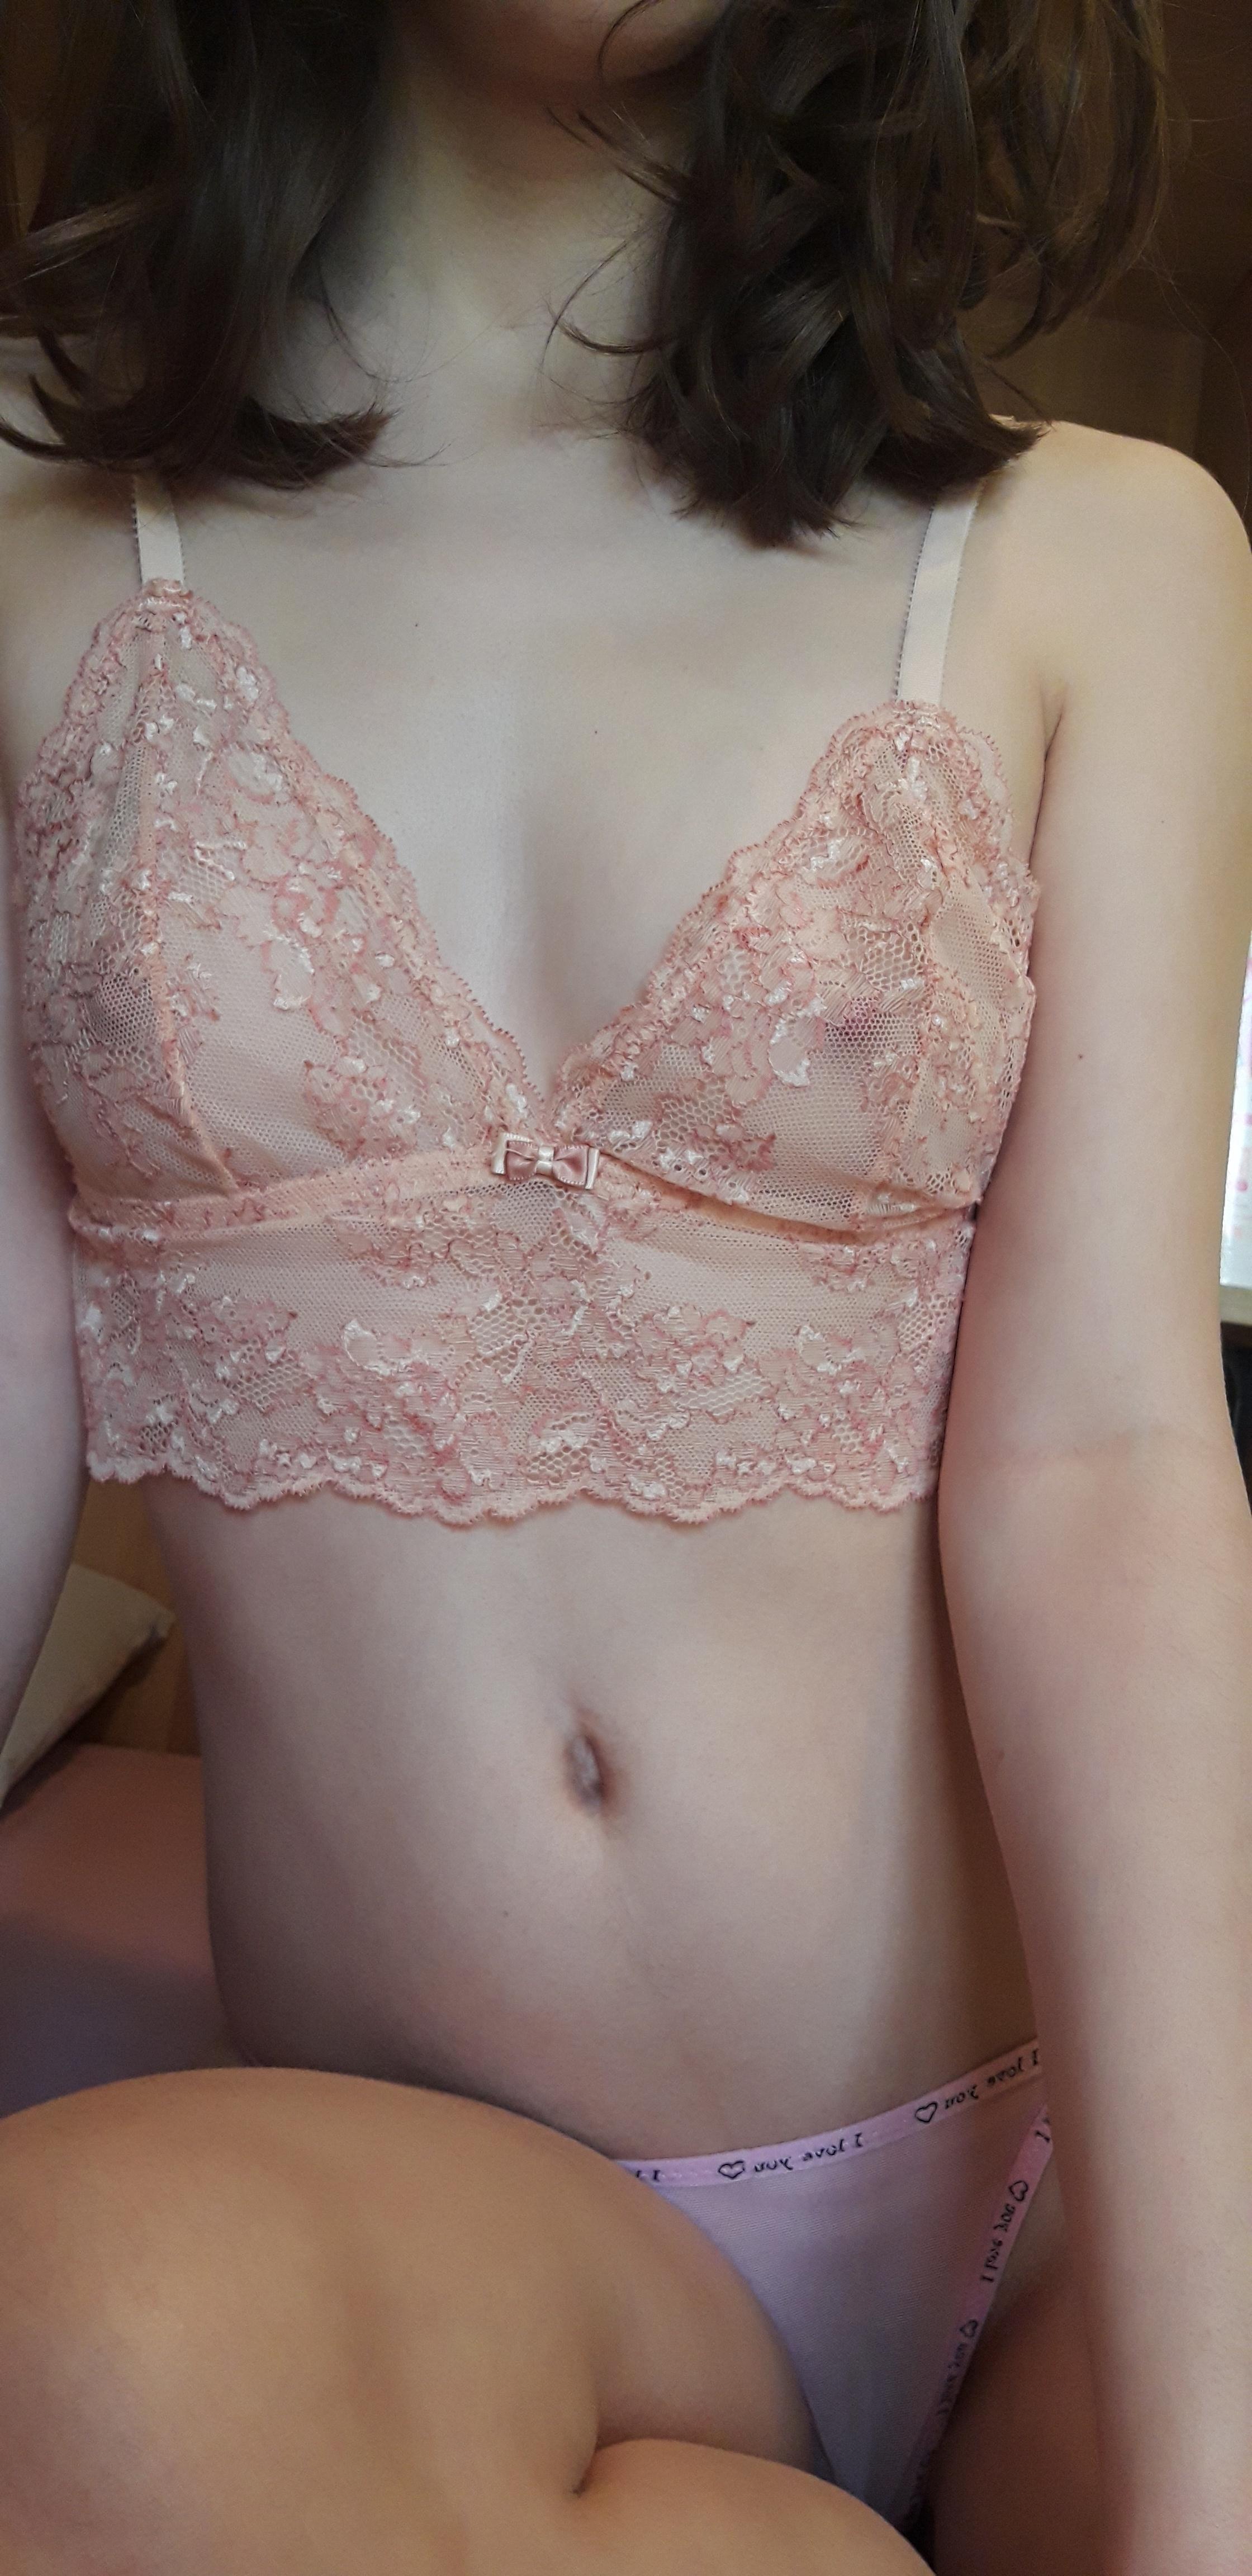 https://static-eu-cdn.eporner.com/gallery/5J/ad/JPzGzEOad5J/13887519-amateur-lingerie-1048962-nipples-thru-lacy-bra-look-more-classy-lol.jpg